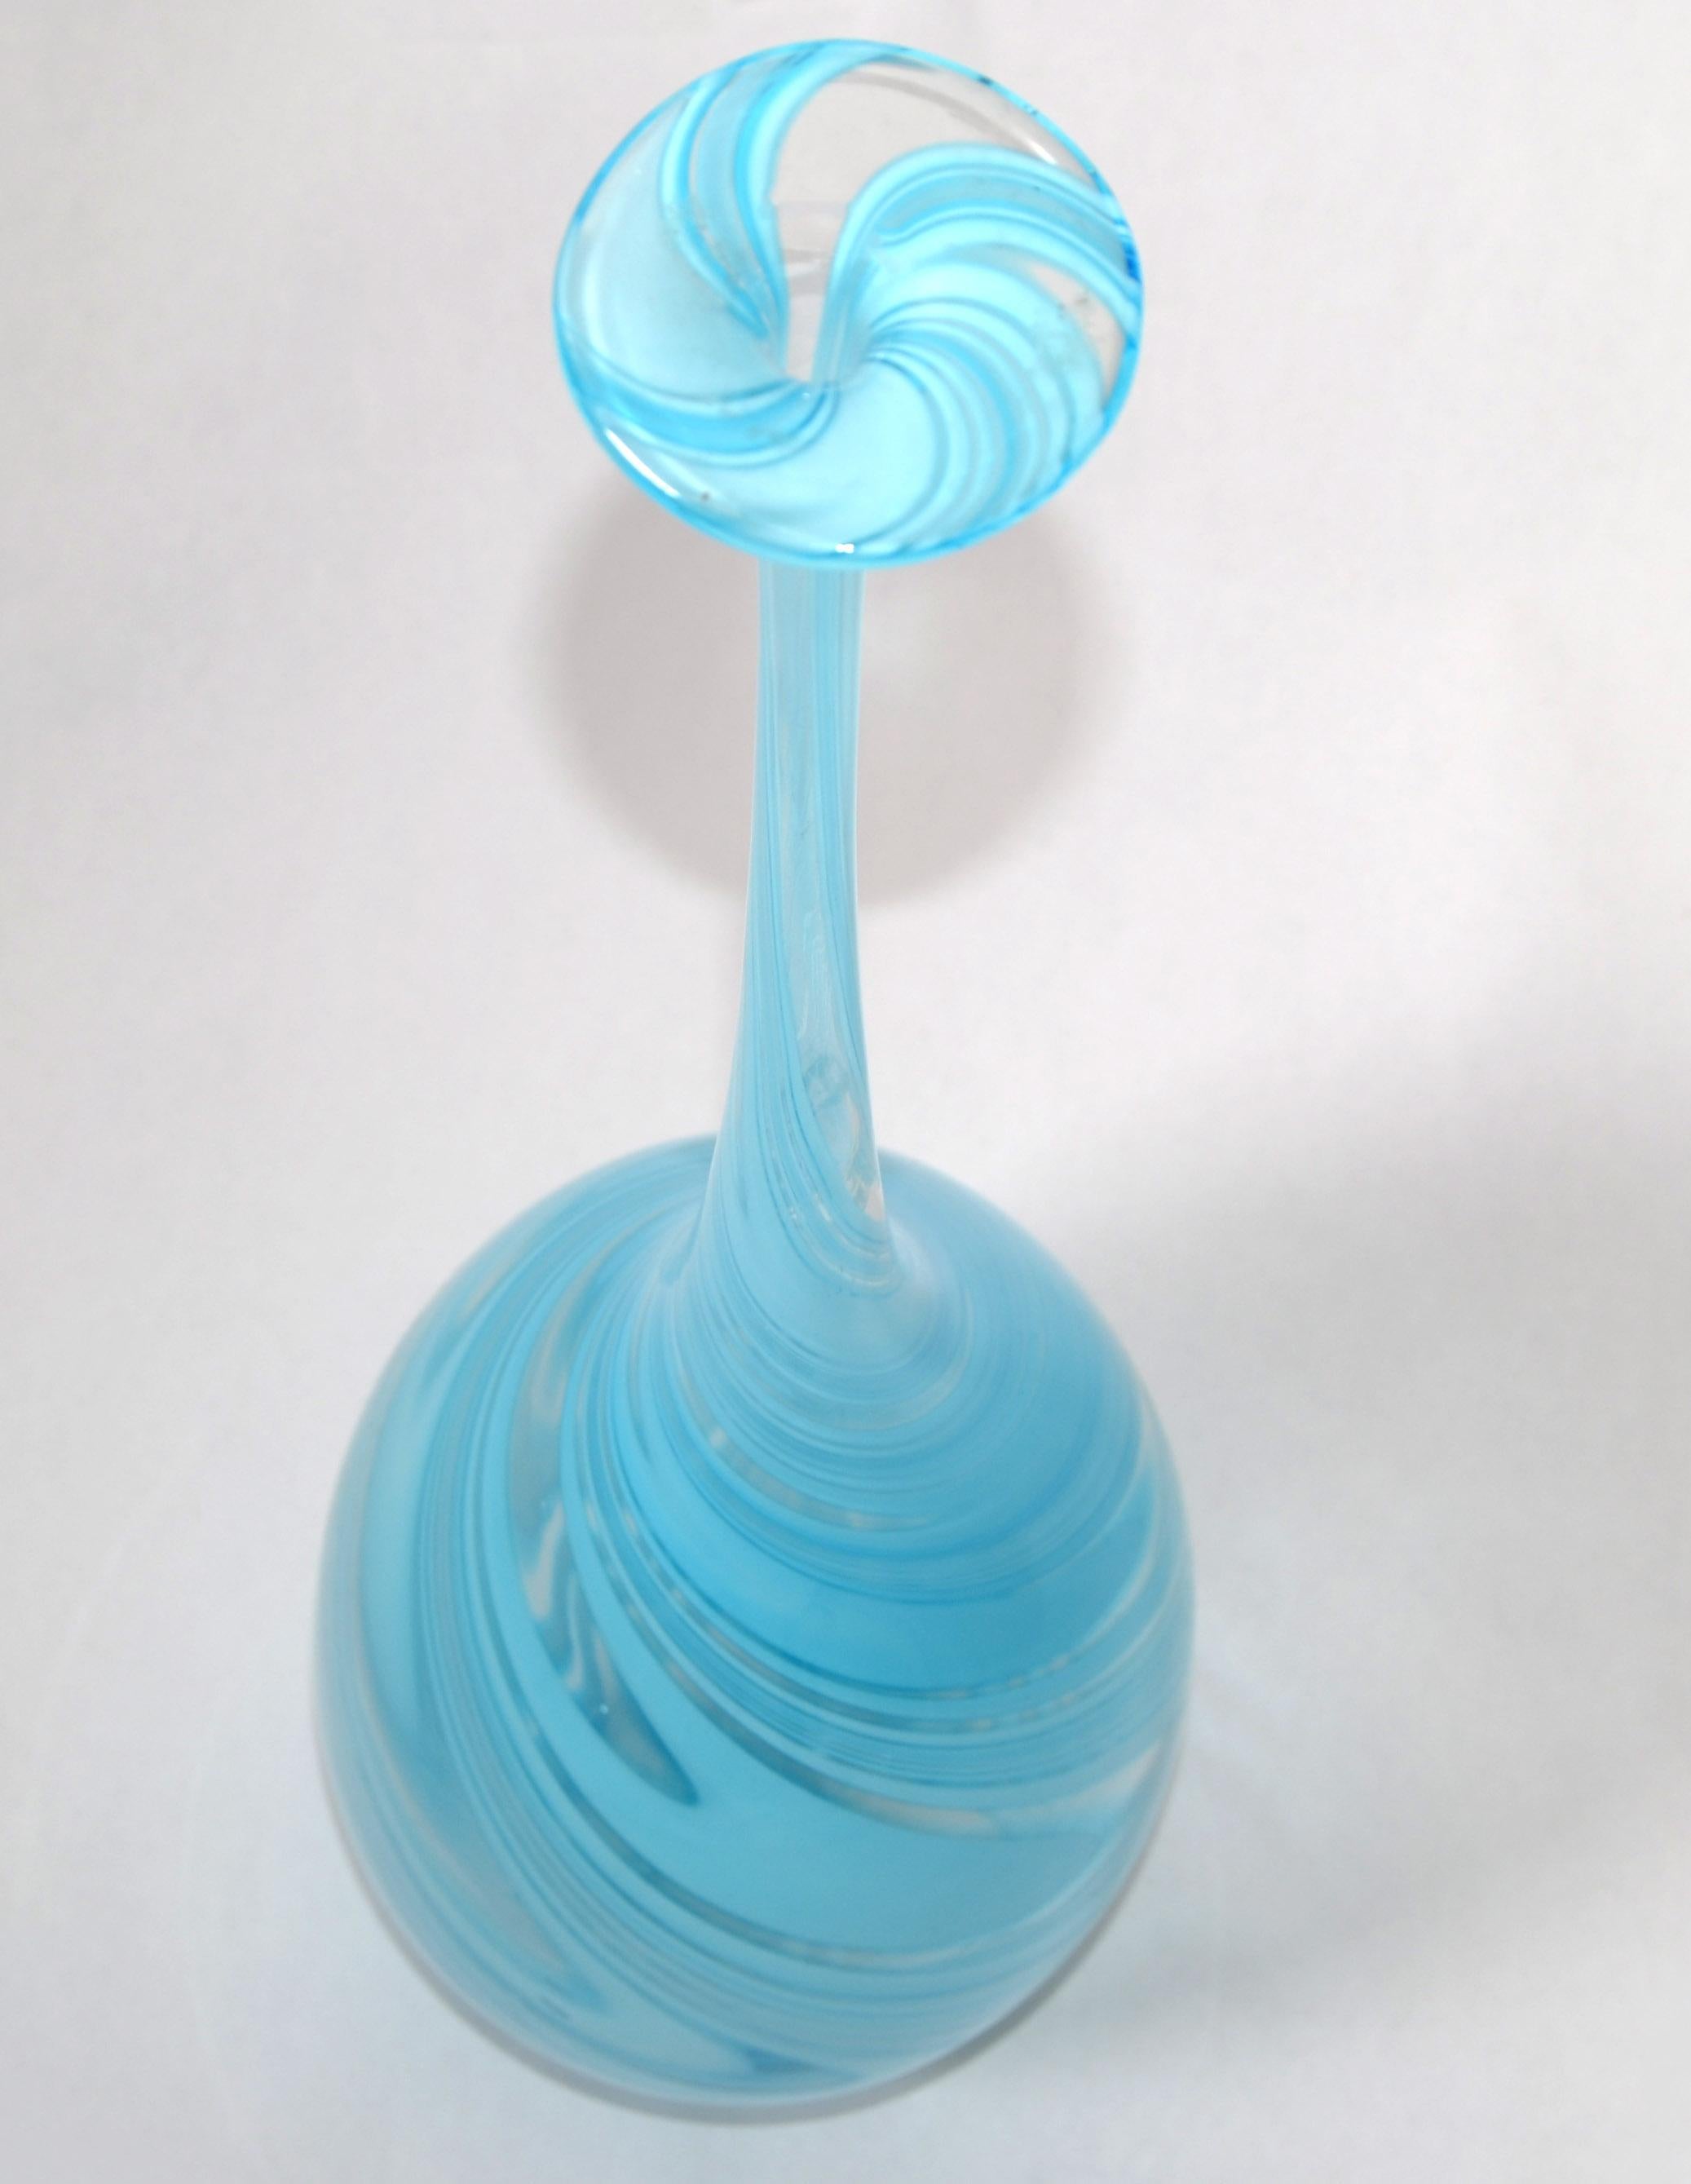 Vetro Artistico Style Murano Blown Glass Decorative Vase Baby Blue Swirls, Italy For Sale 3